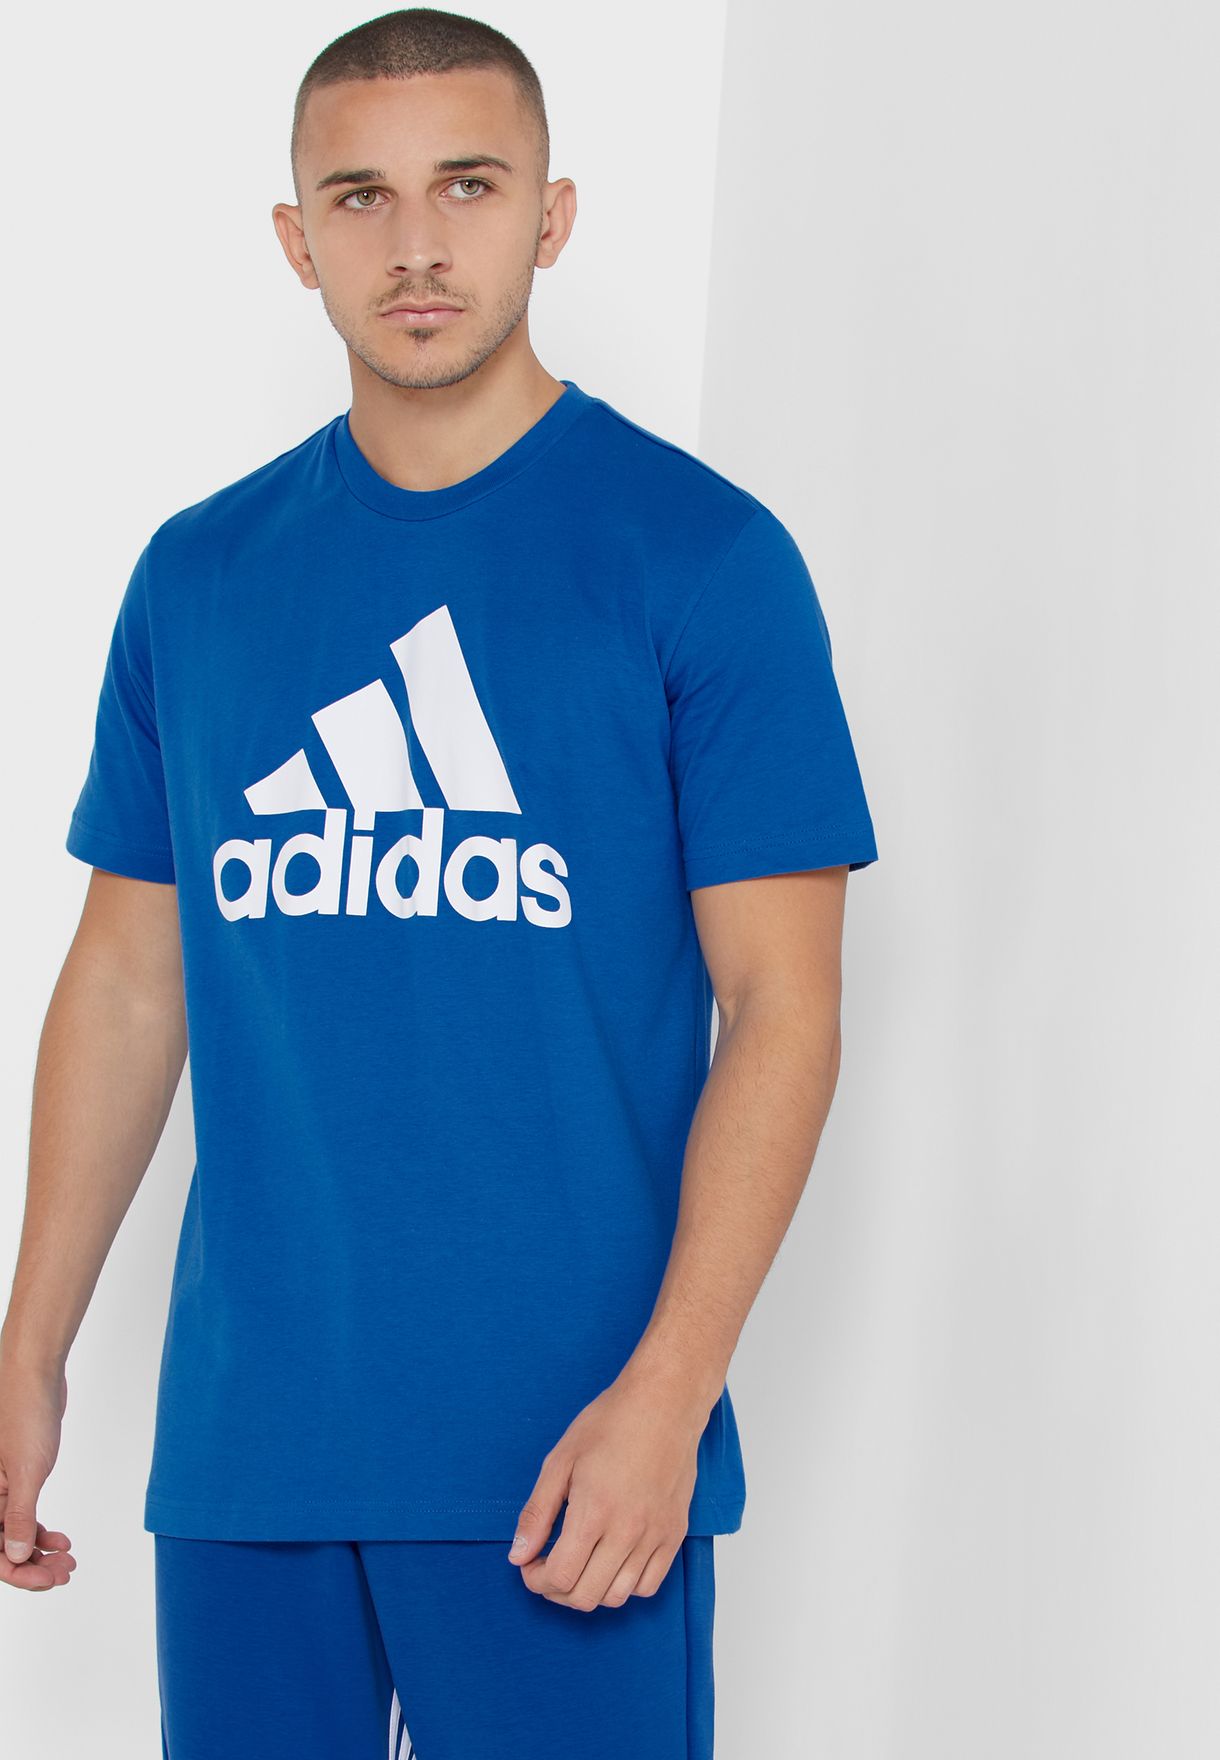 adidas blue shirt